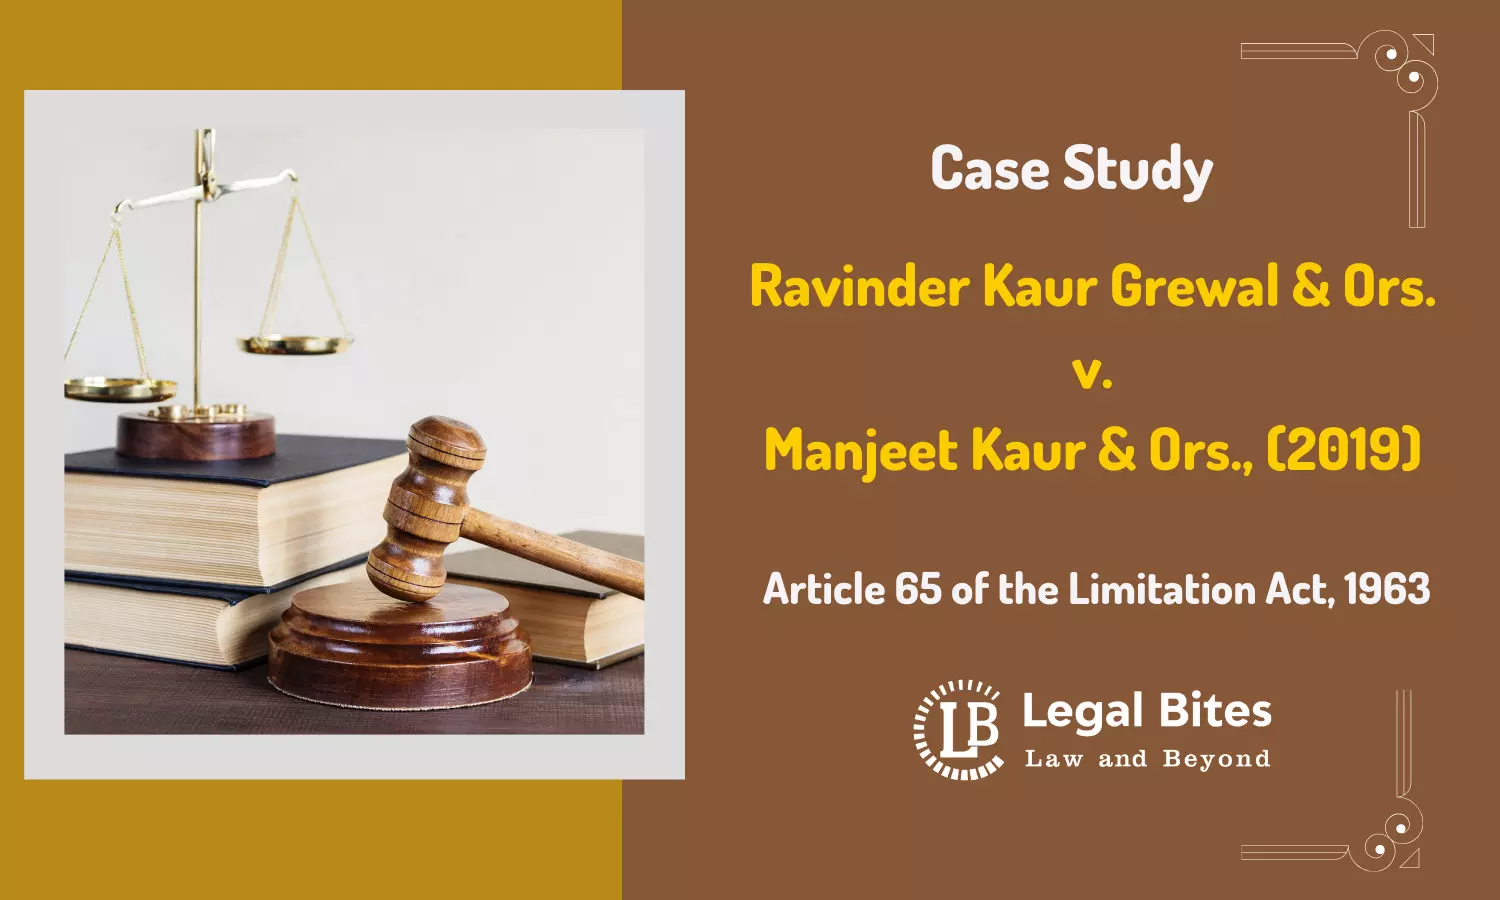 Case Study: Ravinder Kaur Grewal & Ors. v. Manjeet Kaur & Ors.| Article 65 of the Limitation Act, 1963